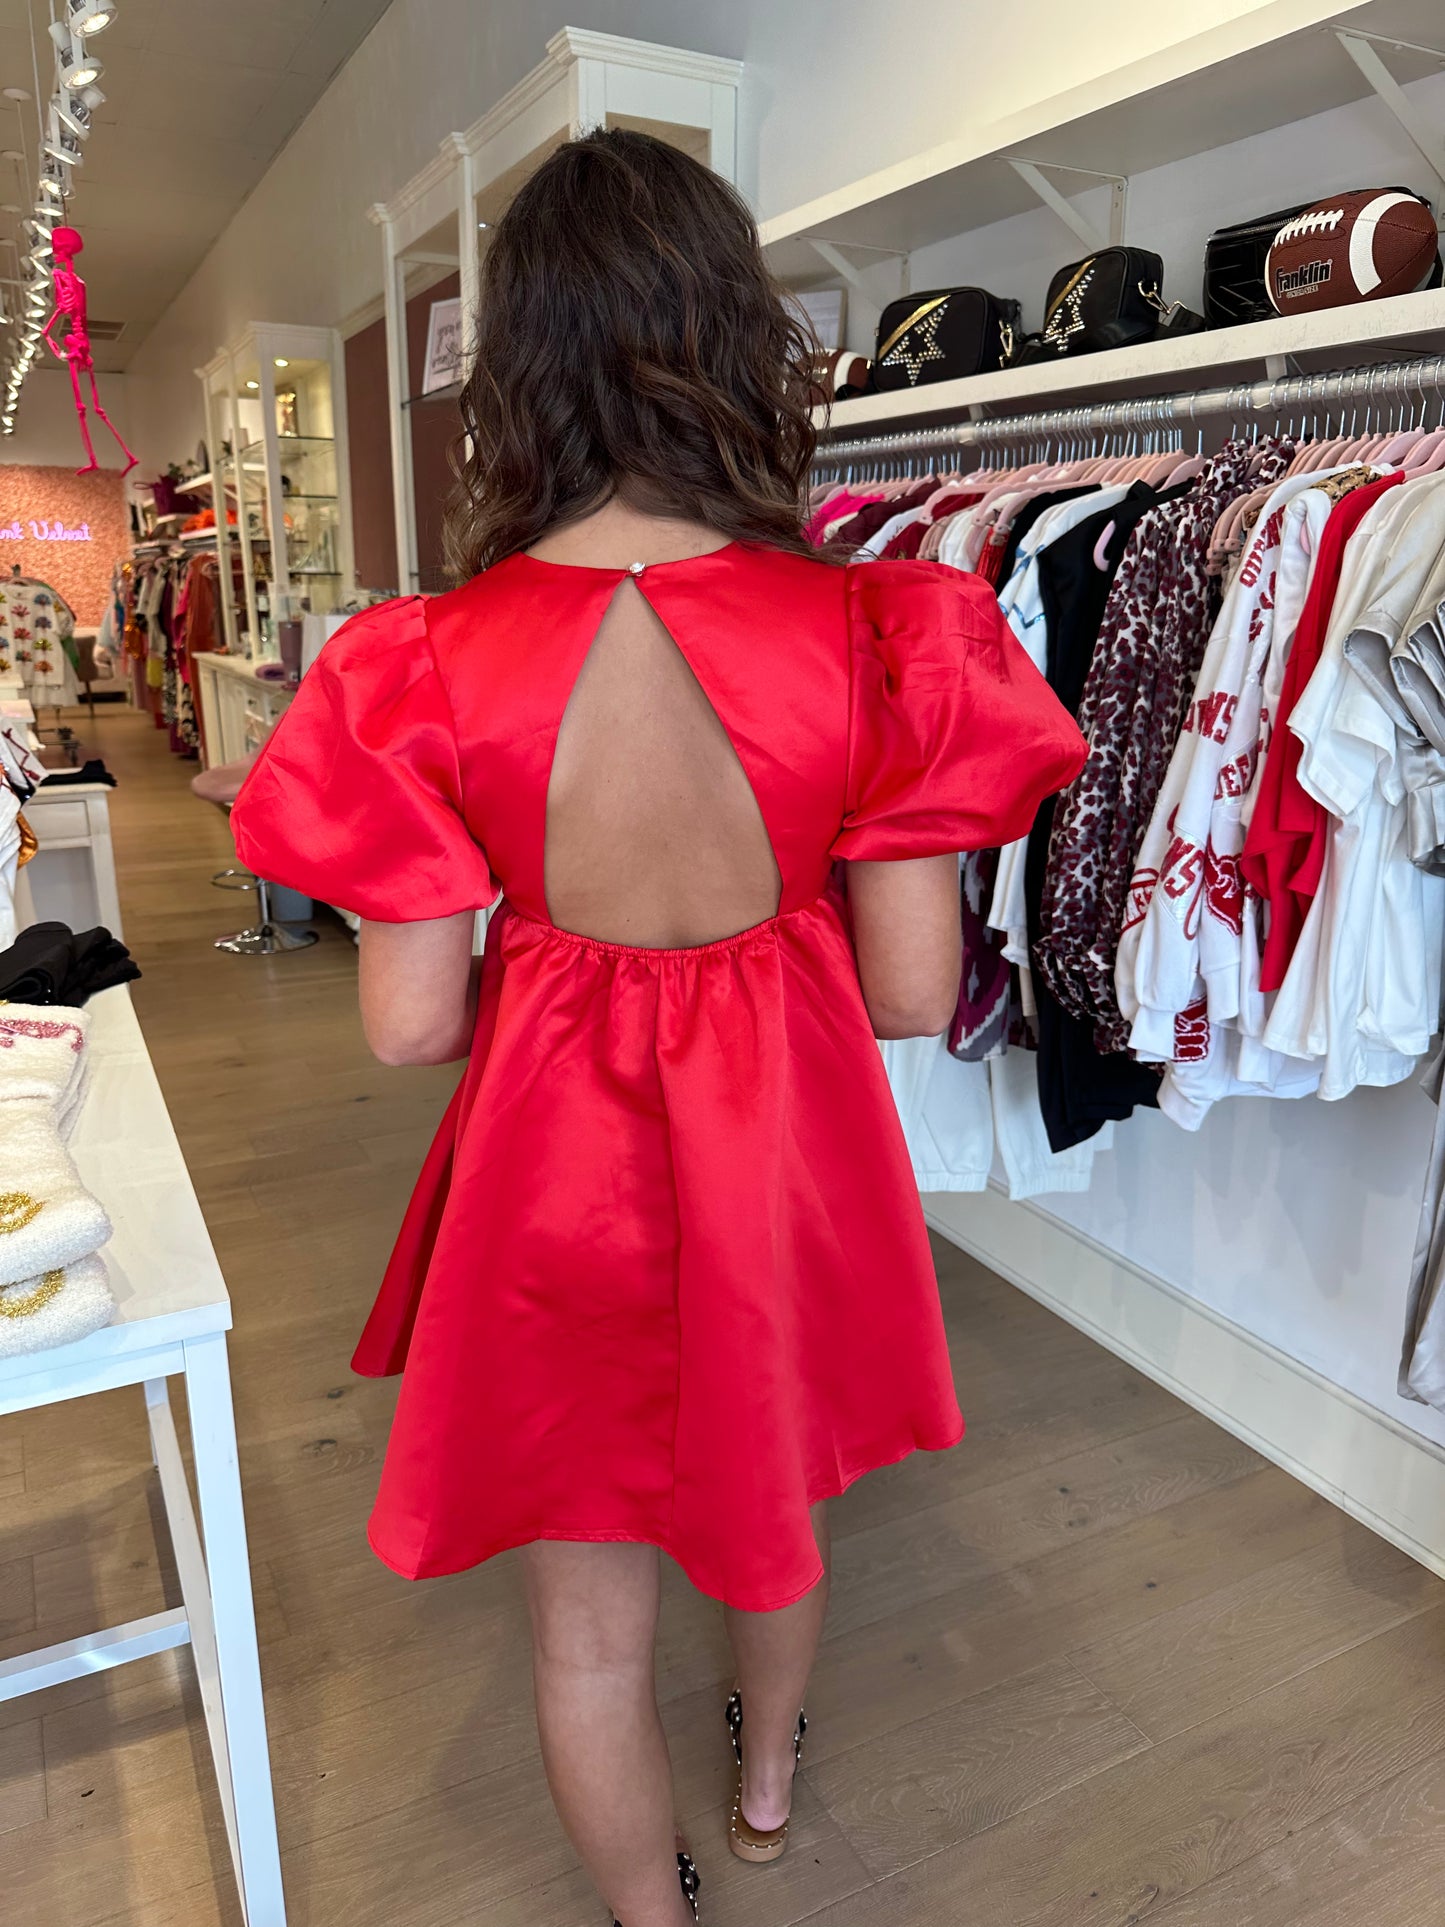 The Lori Lux dress in Red